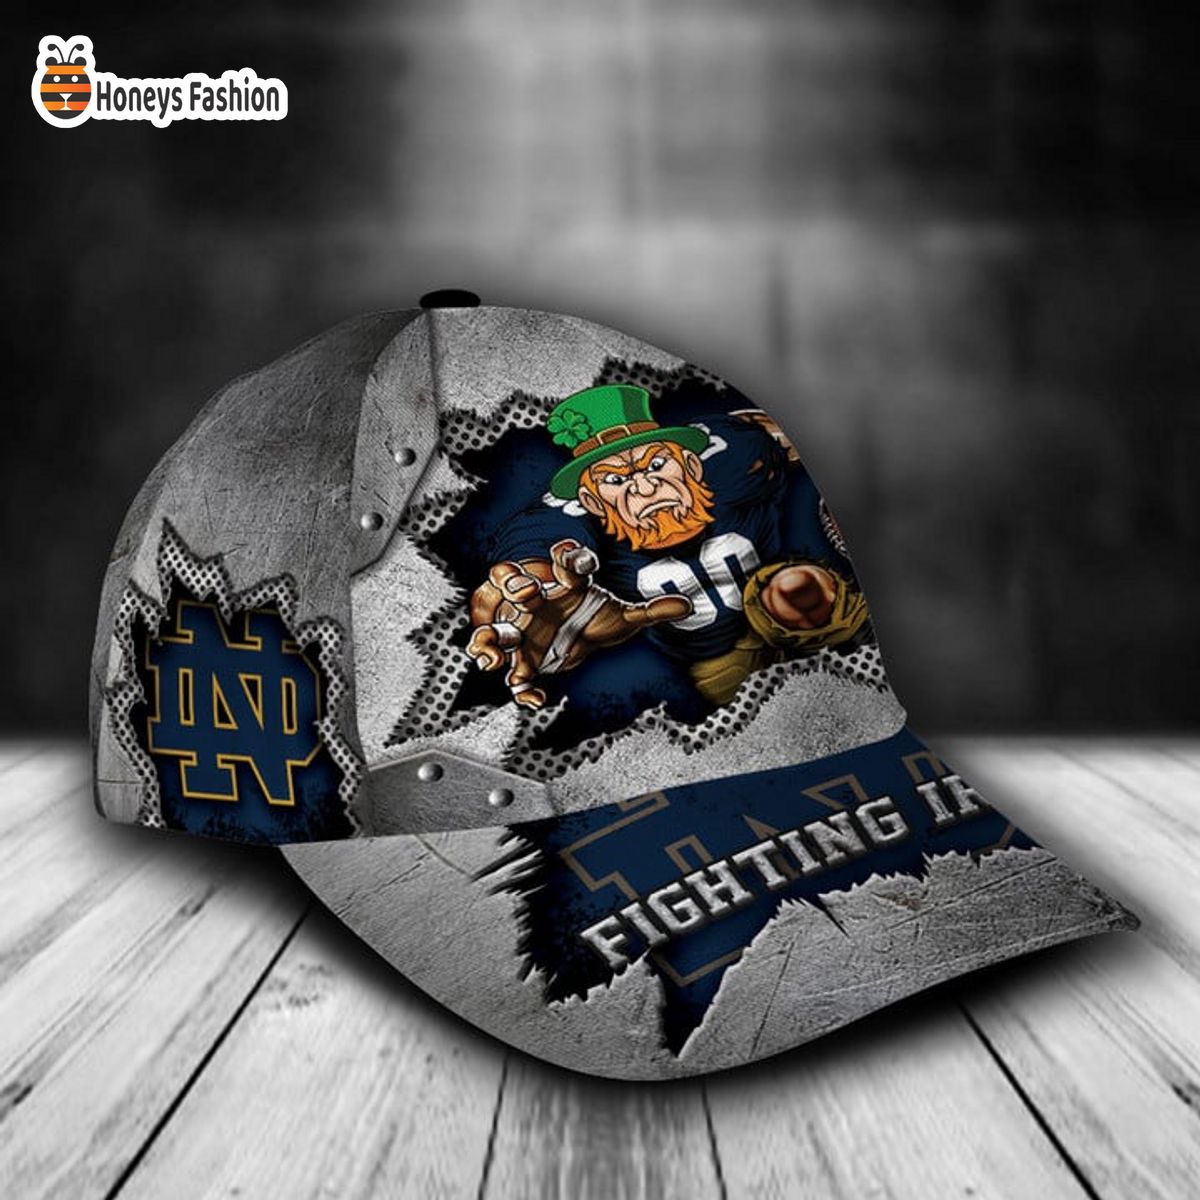 Notre Dame Fighting Irish mascot custom name classic cap